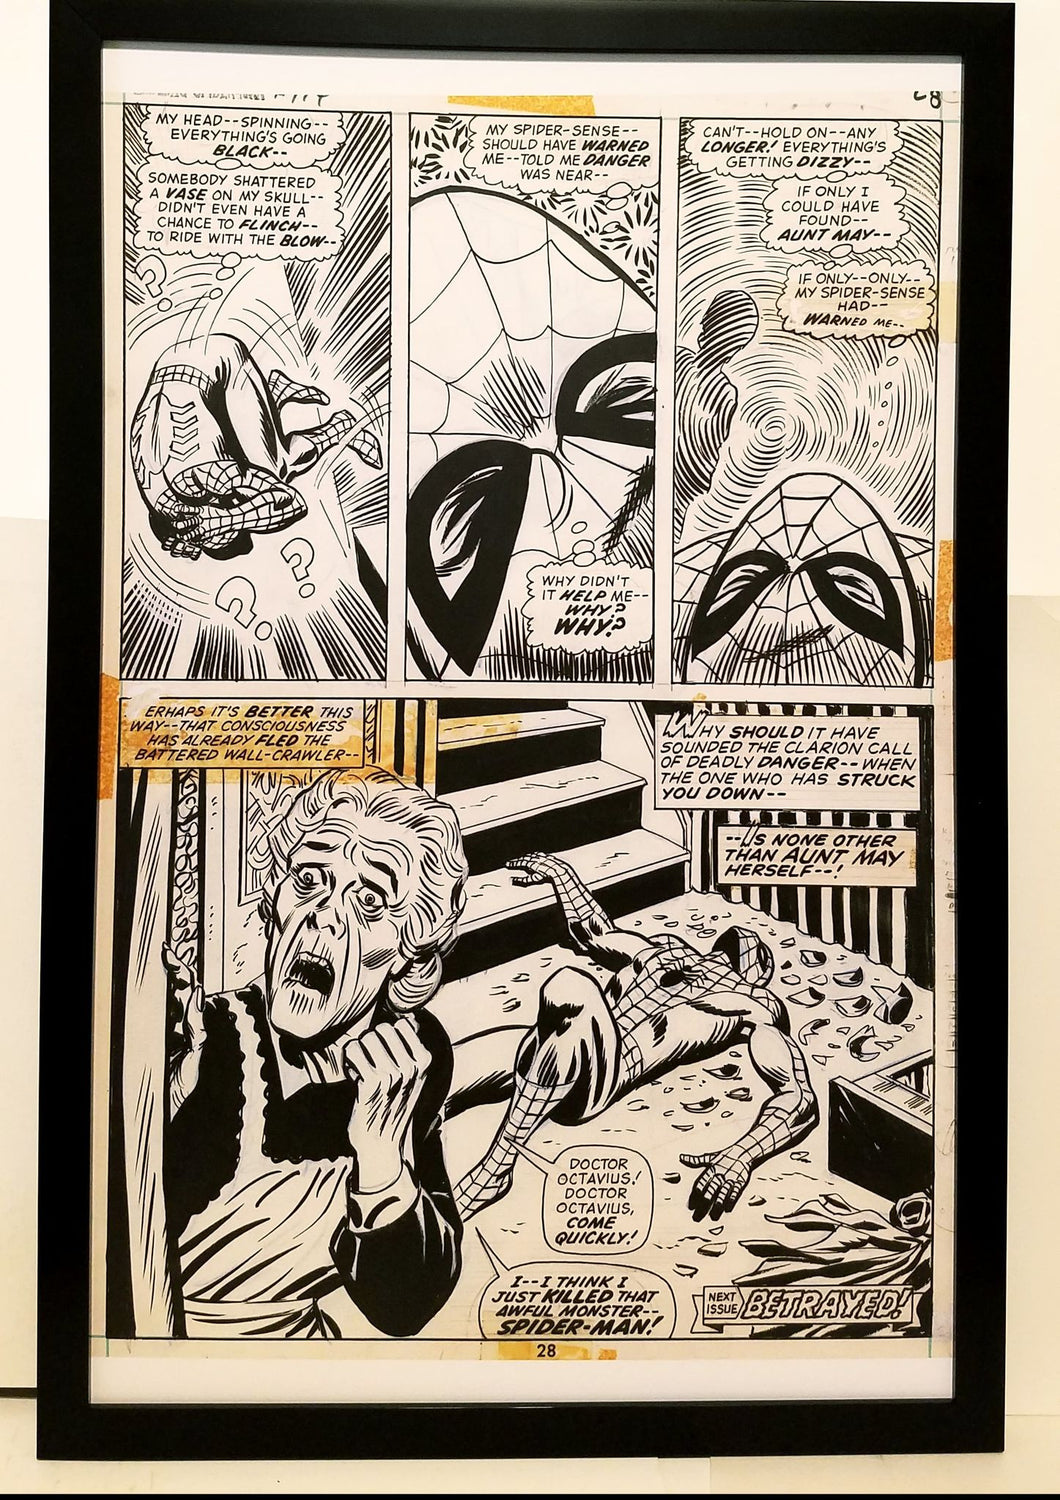 Amazing Spider-Man #114 pg. 28 11x17 FRAMED Original Art Poster Marvel Comics